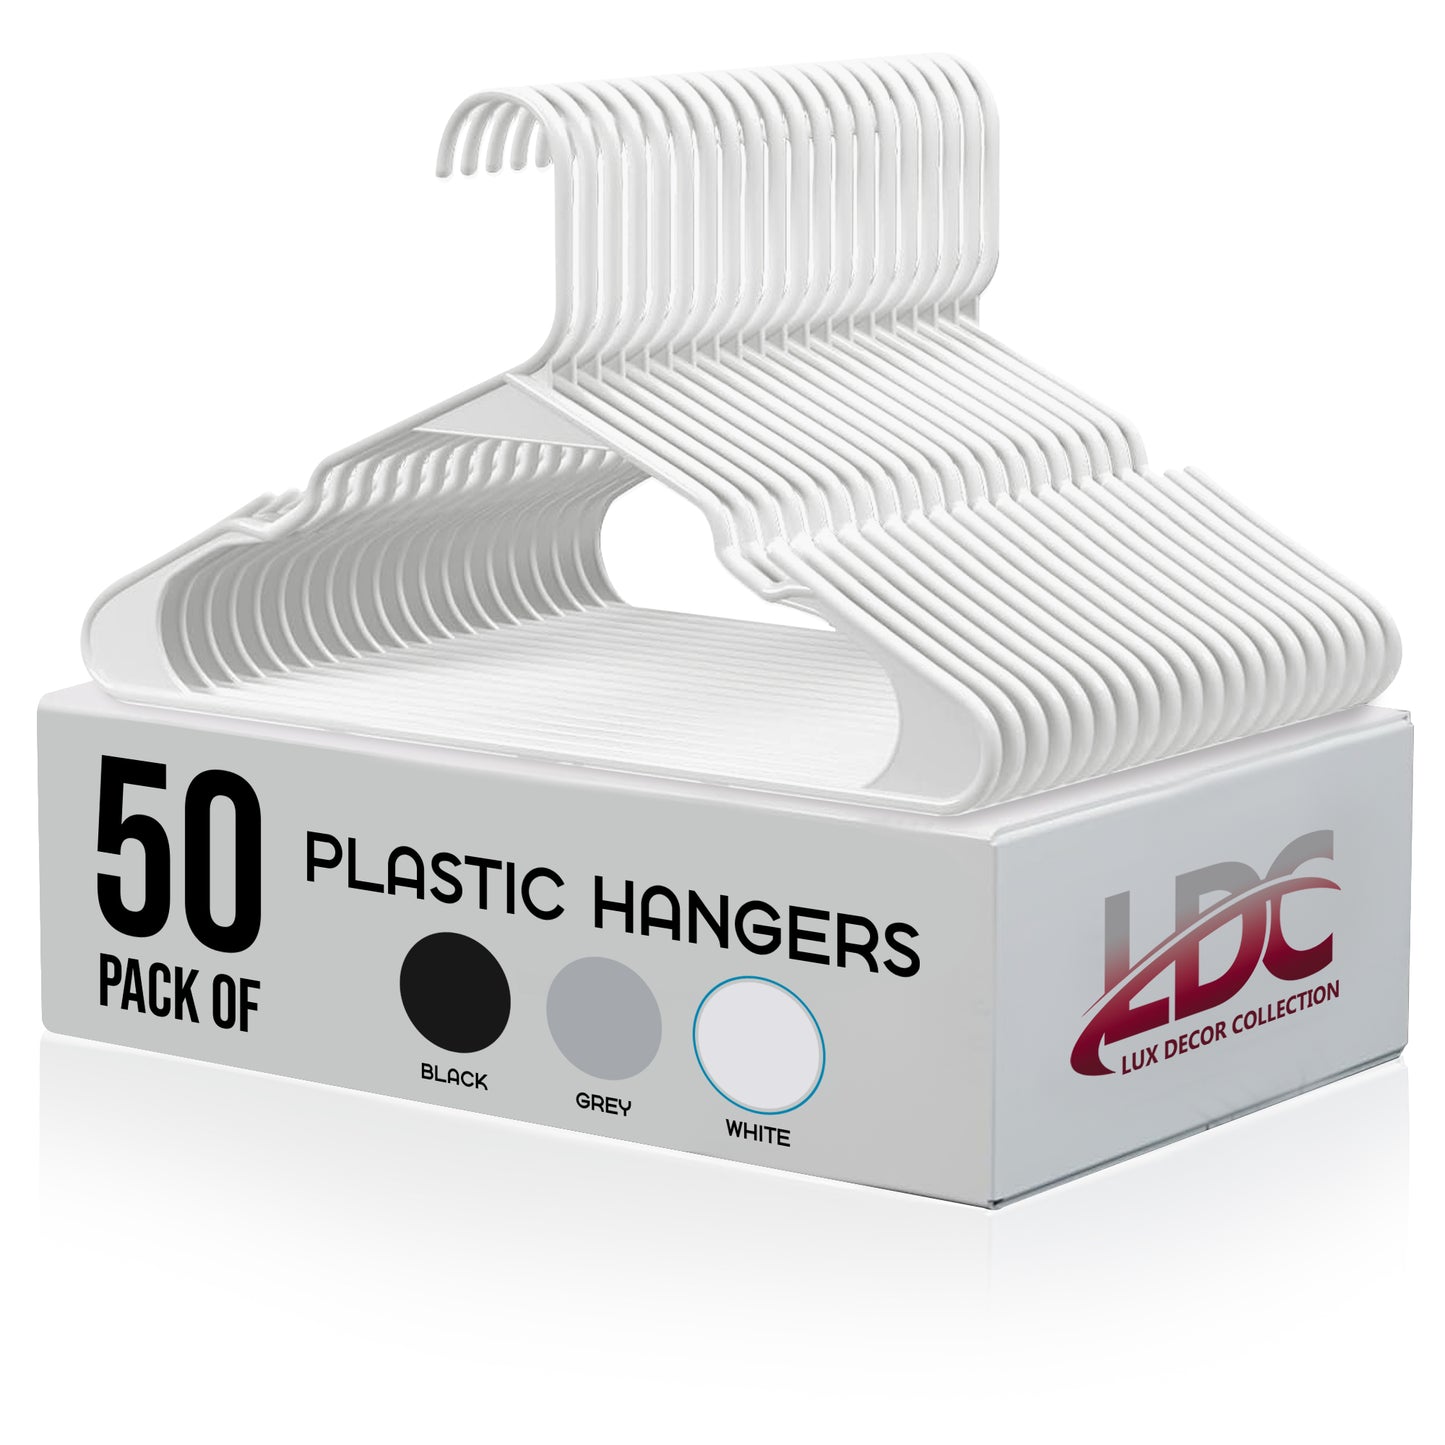 Plastic Hangers Pack of 50, Non-Slip Coat and Shirt Hangers